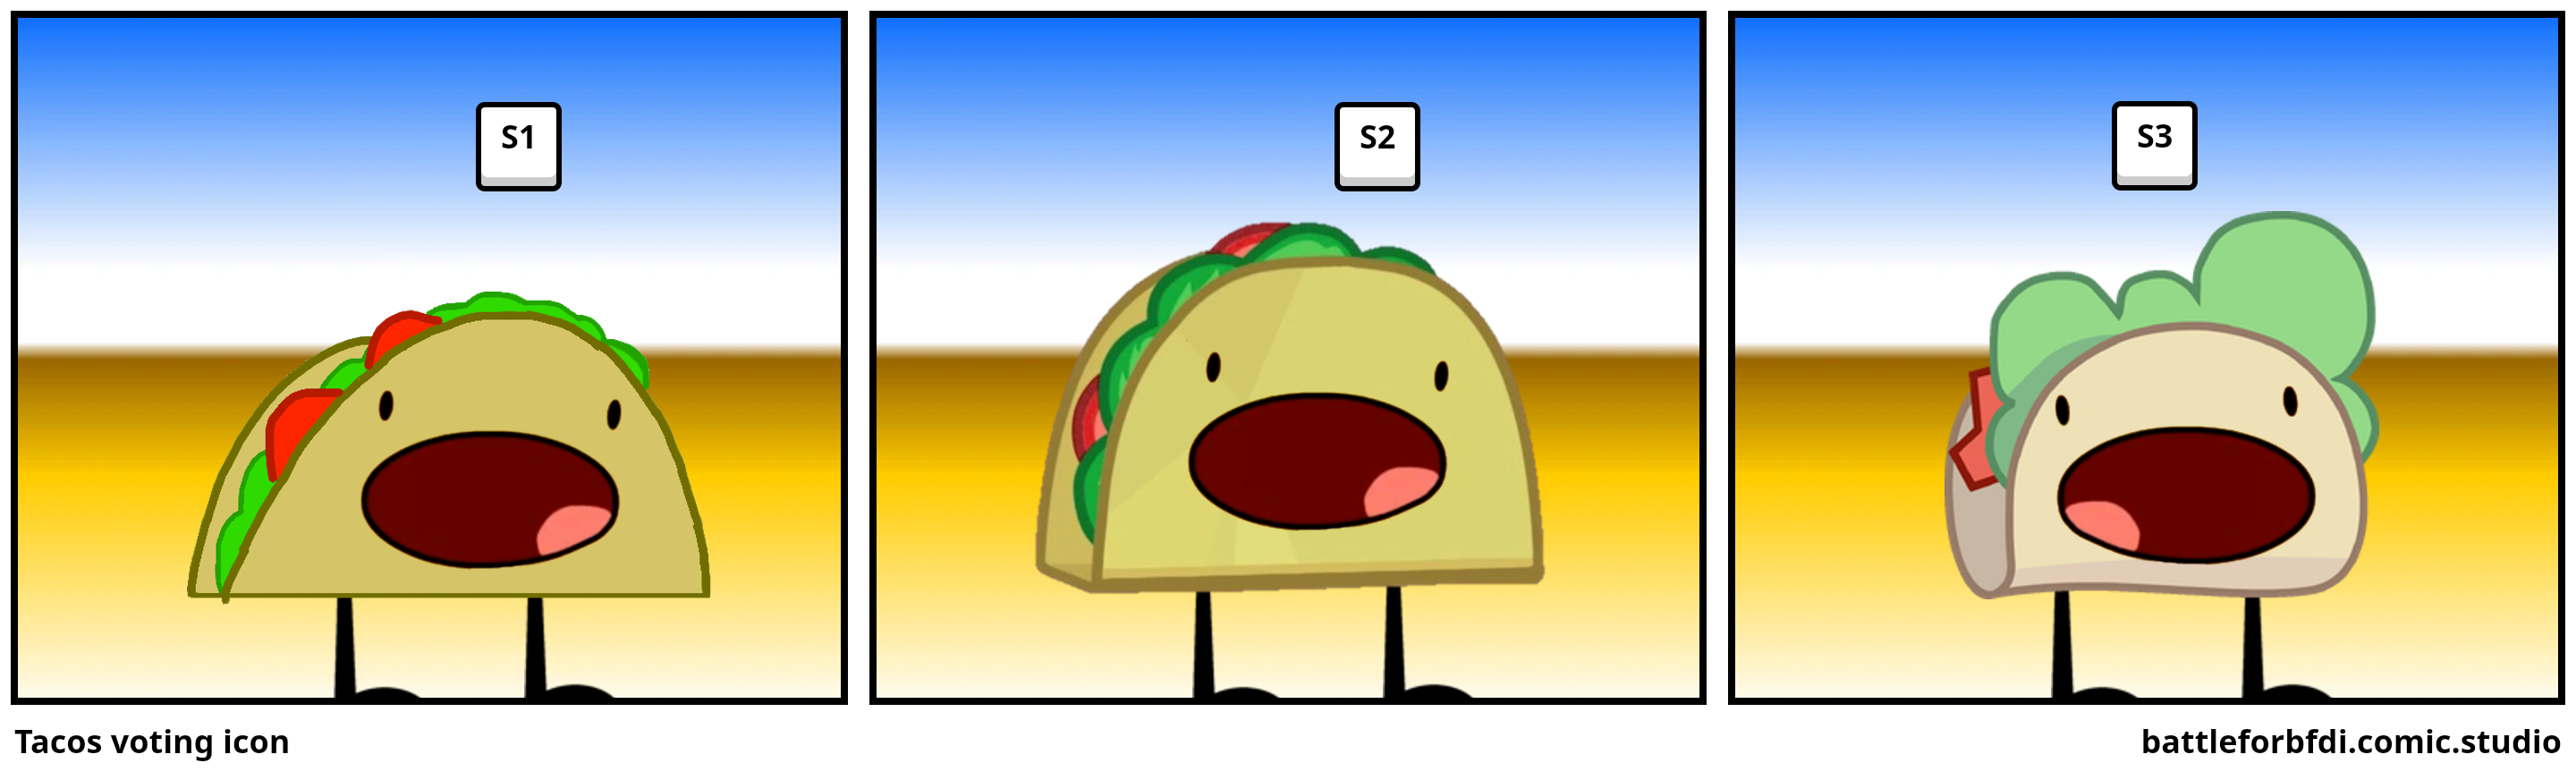 Tacos voting icon